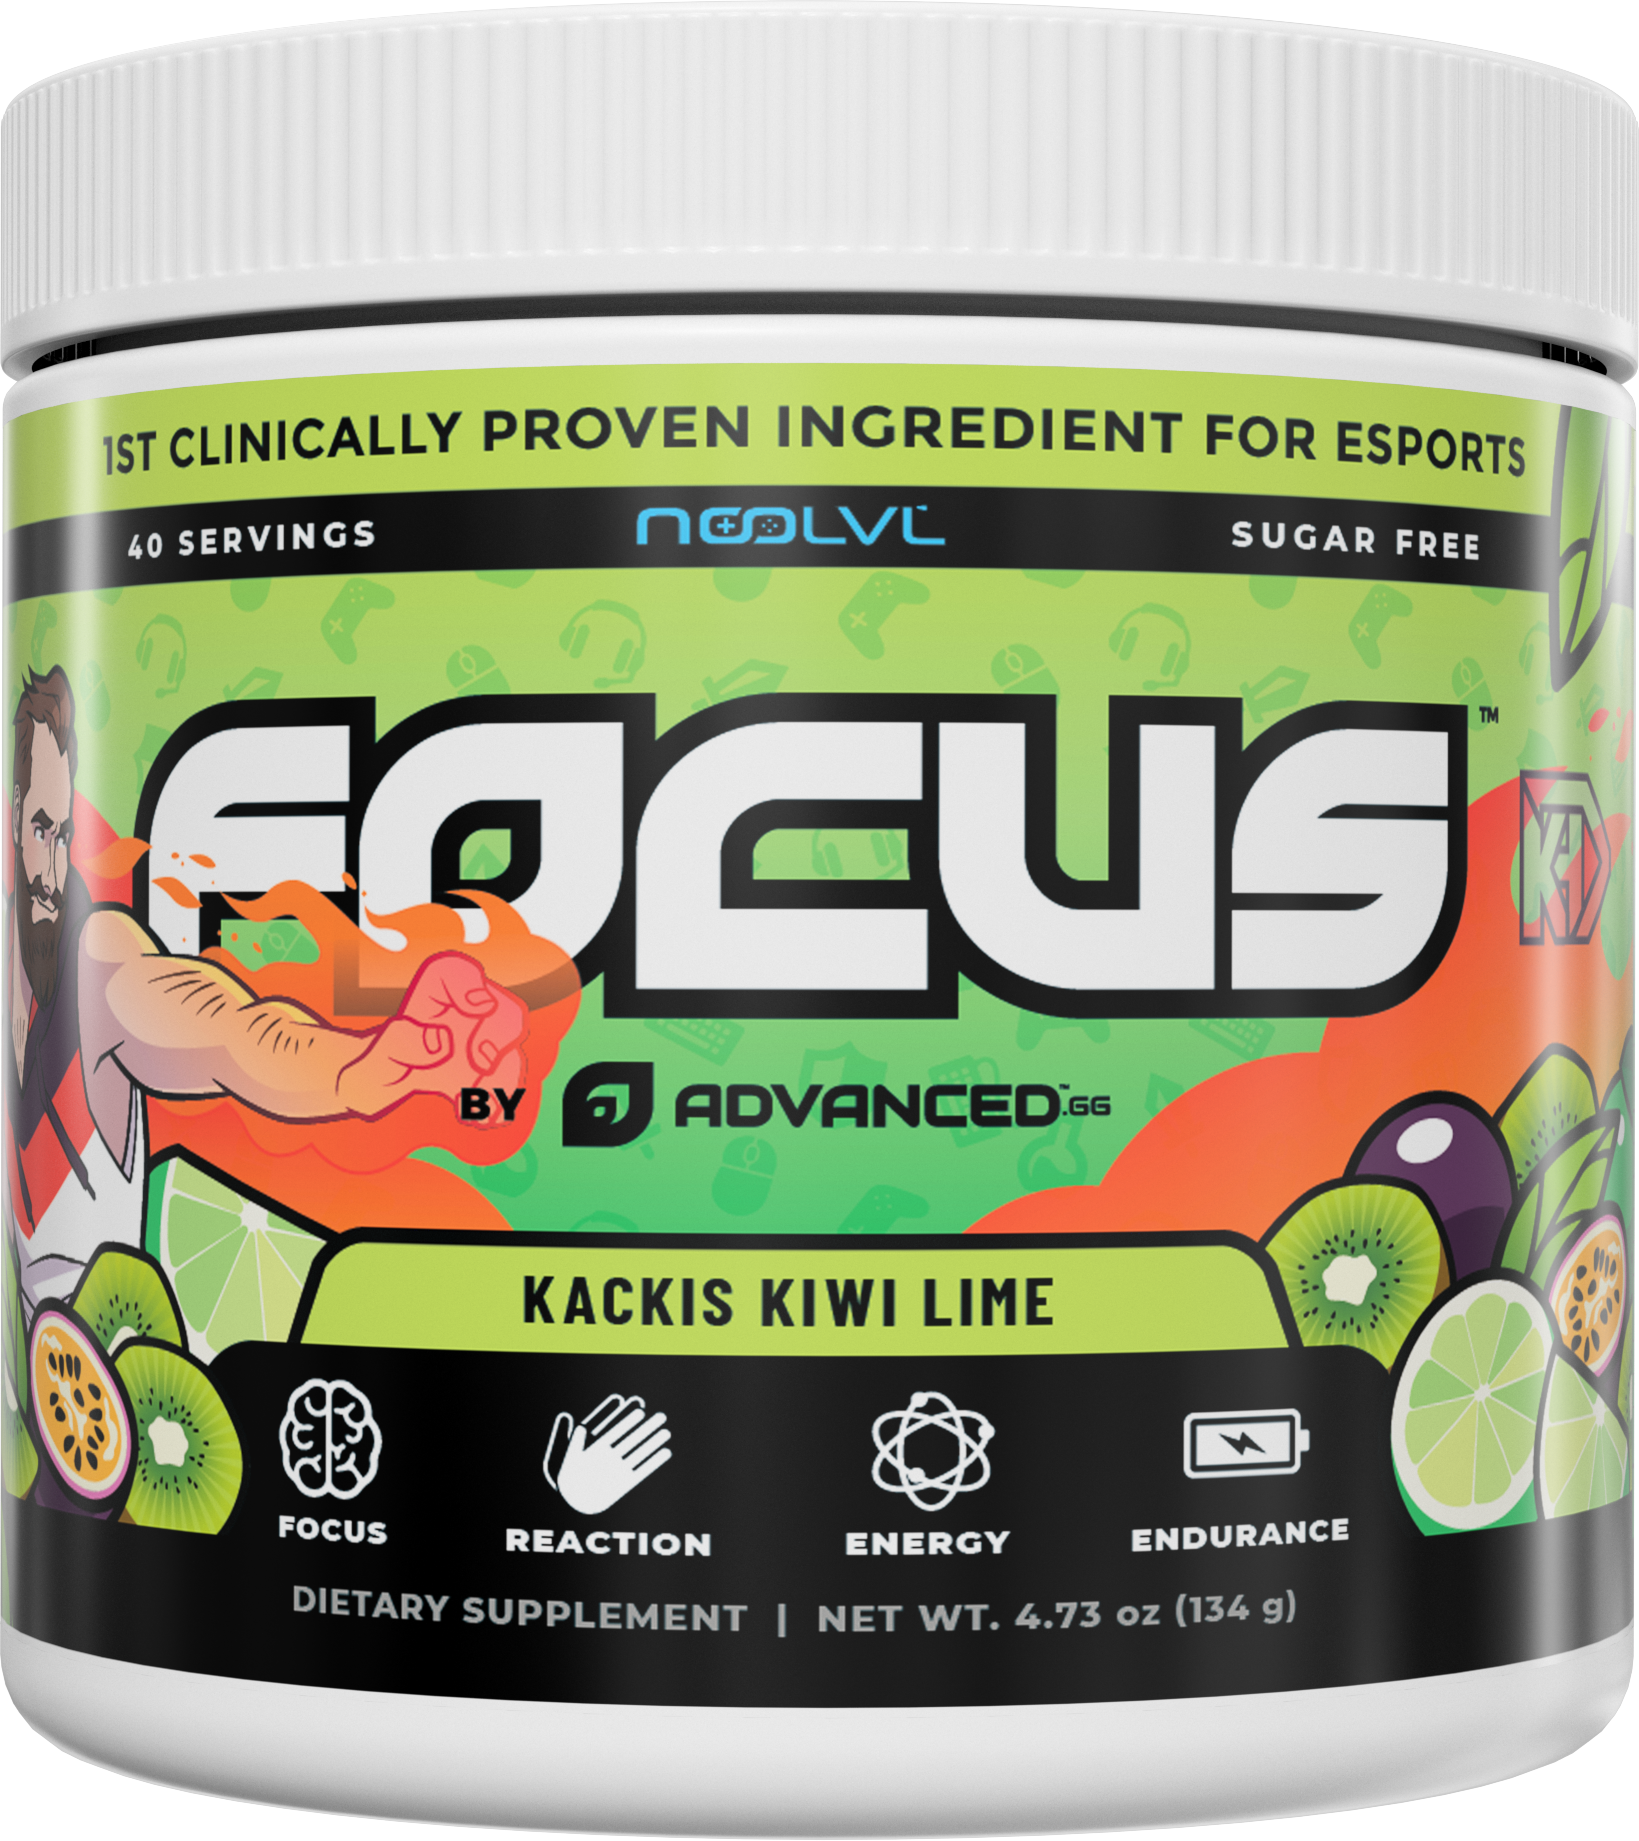 Advanced.gg Focus Kackis Kiwi Lime